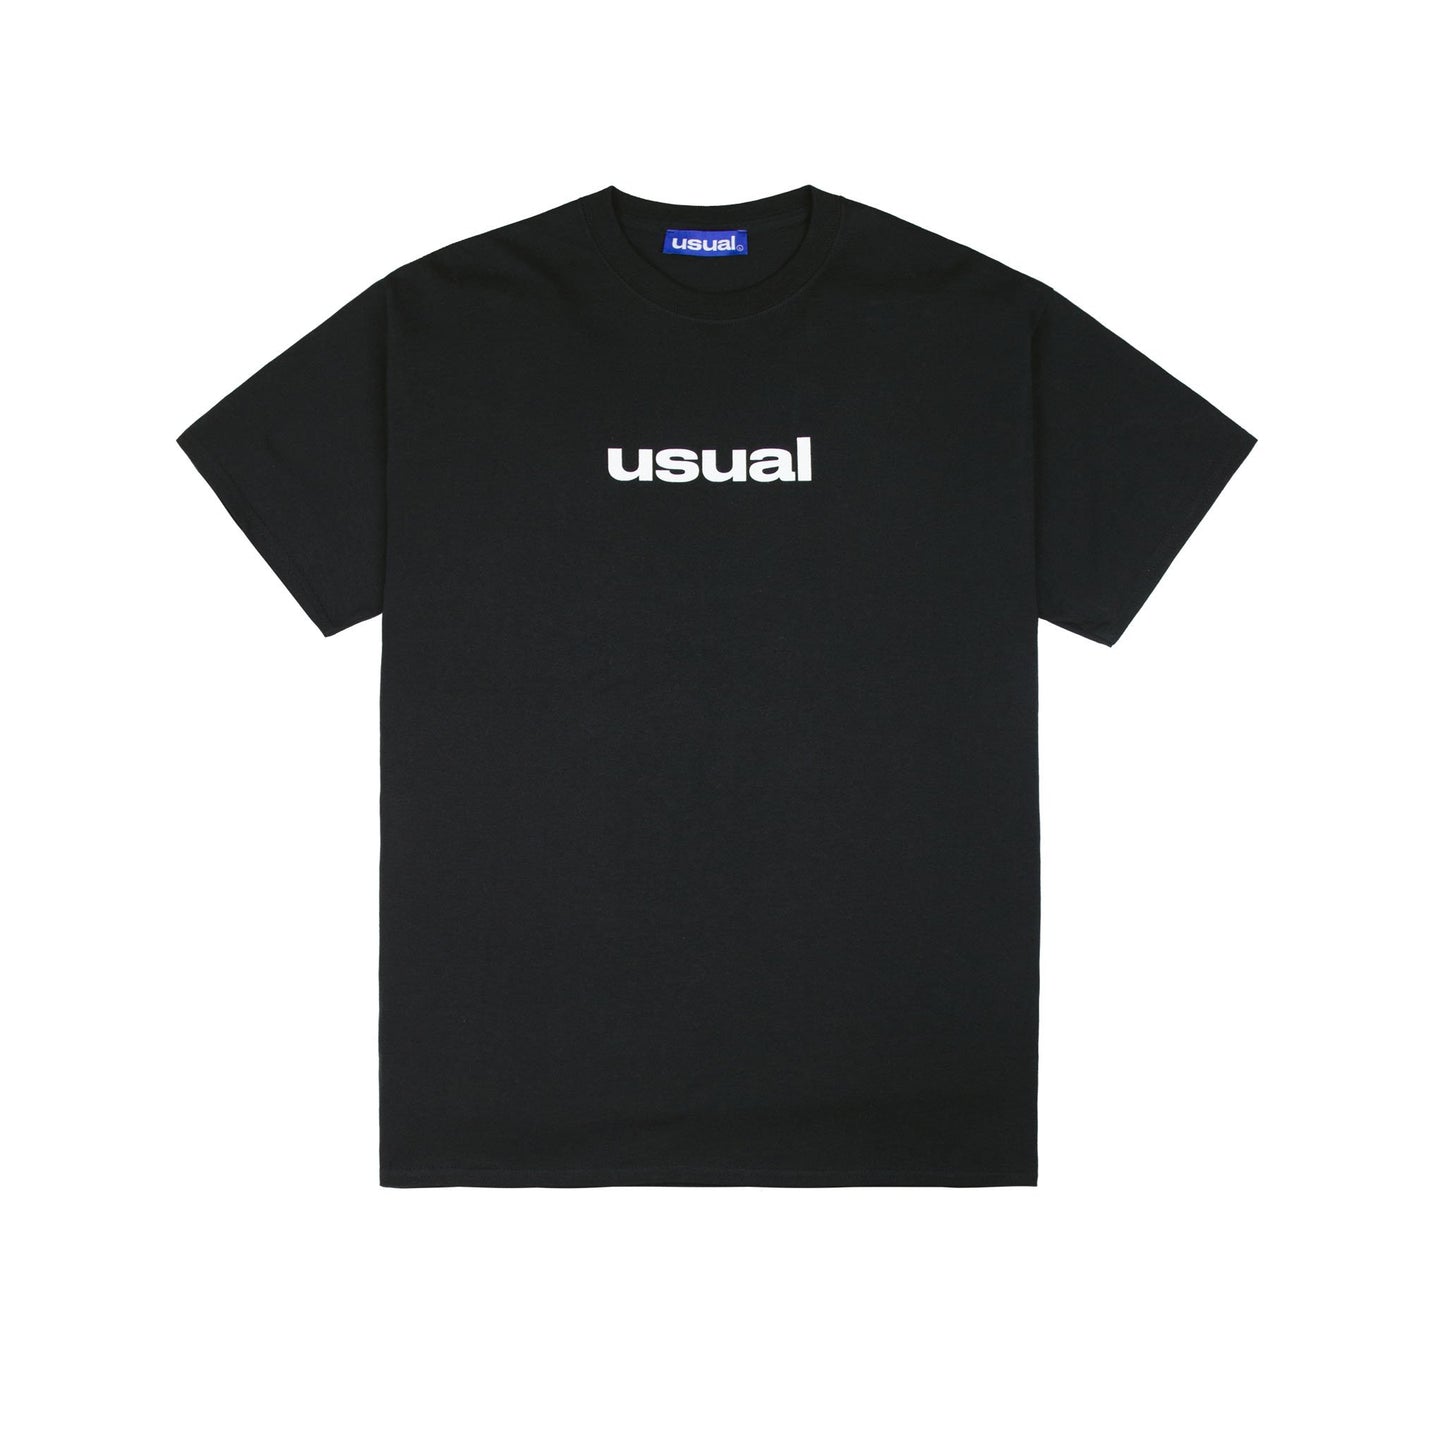 Usual - Shots T-Shirt Black